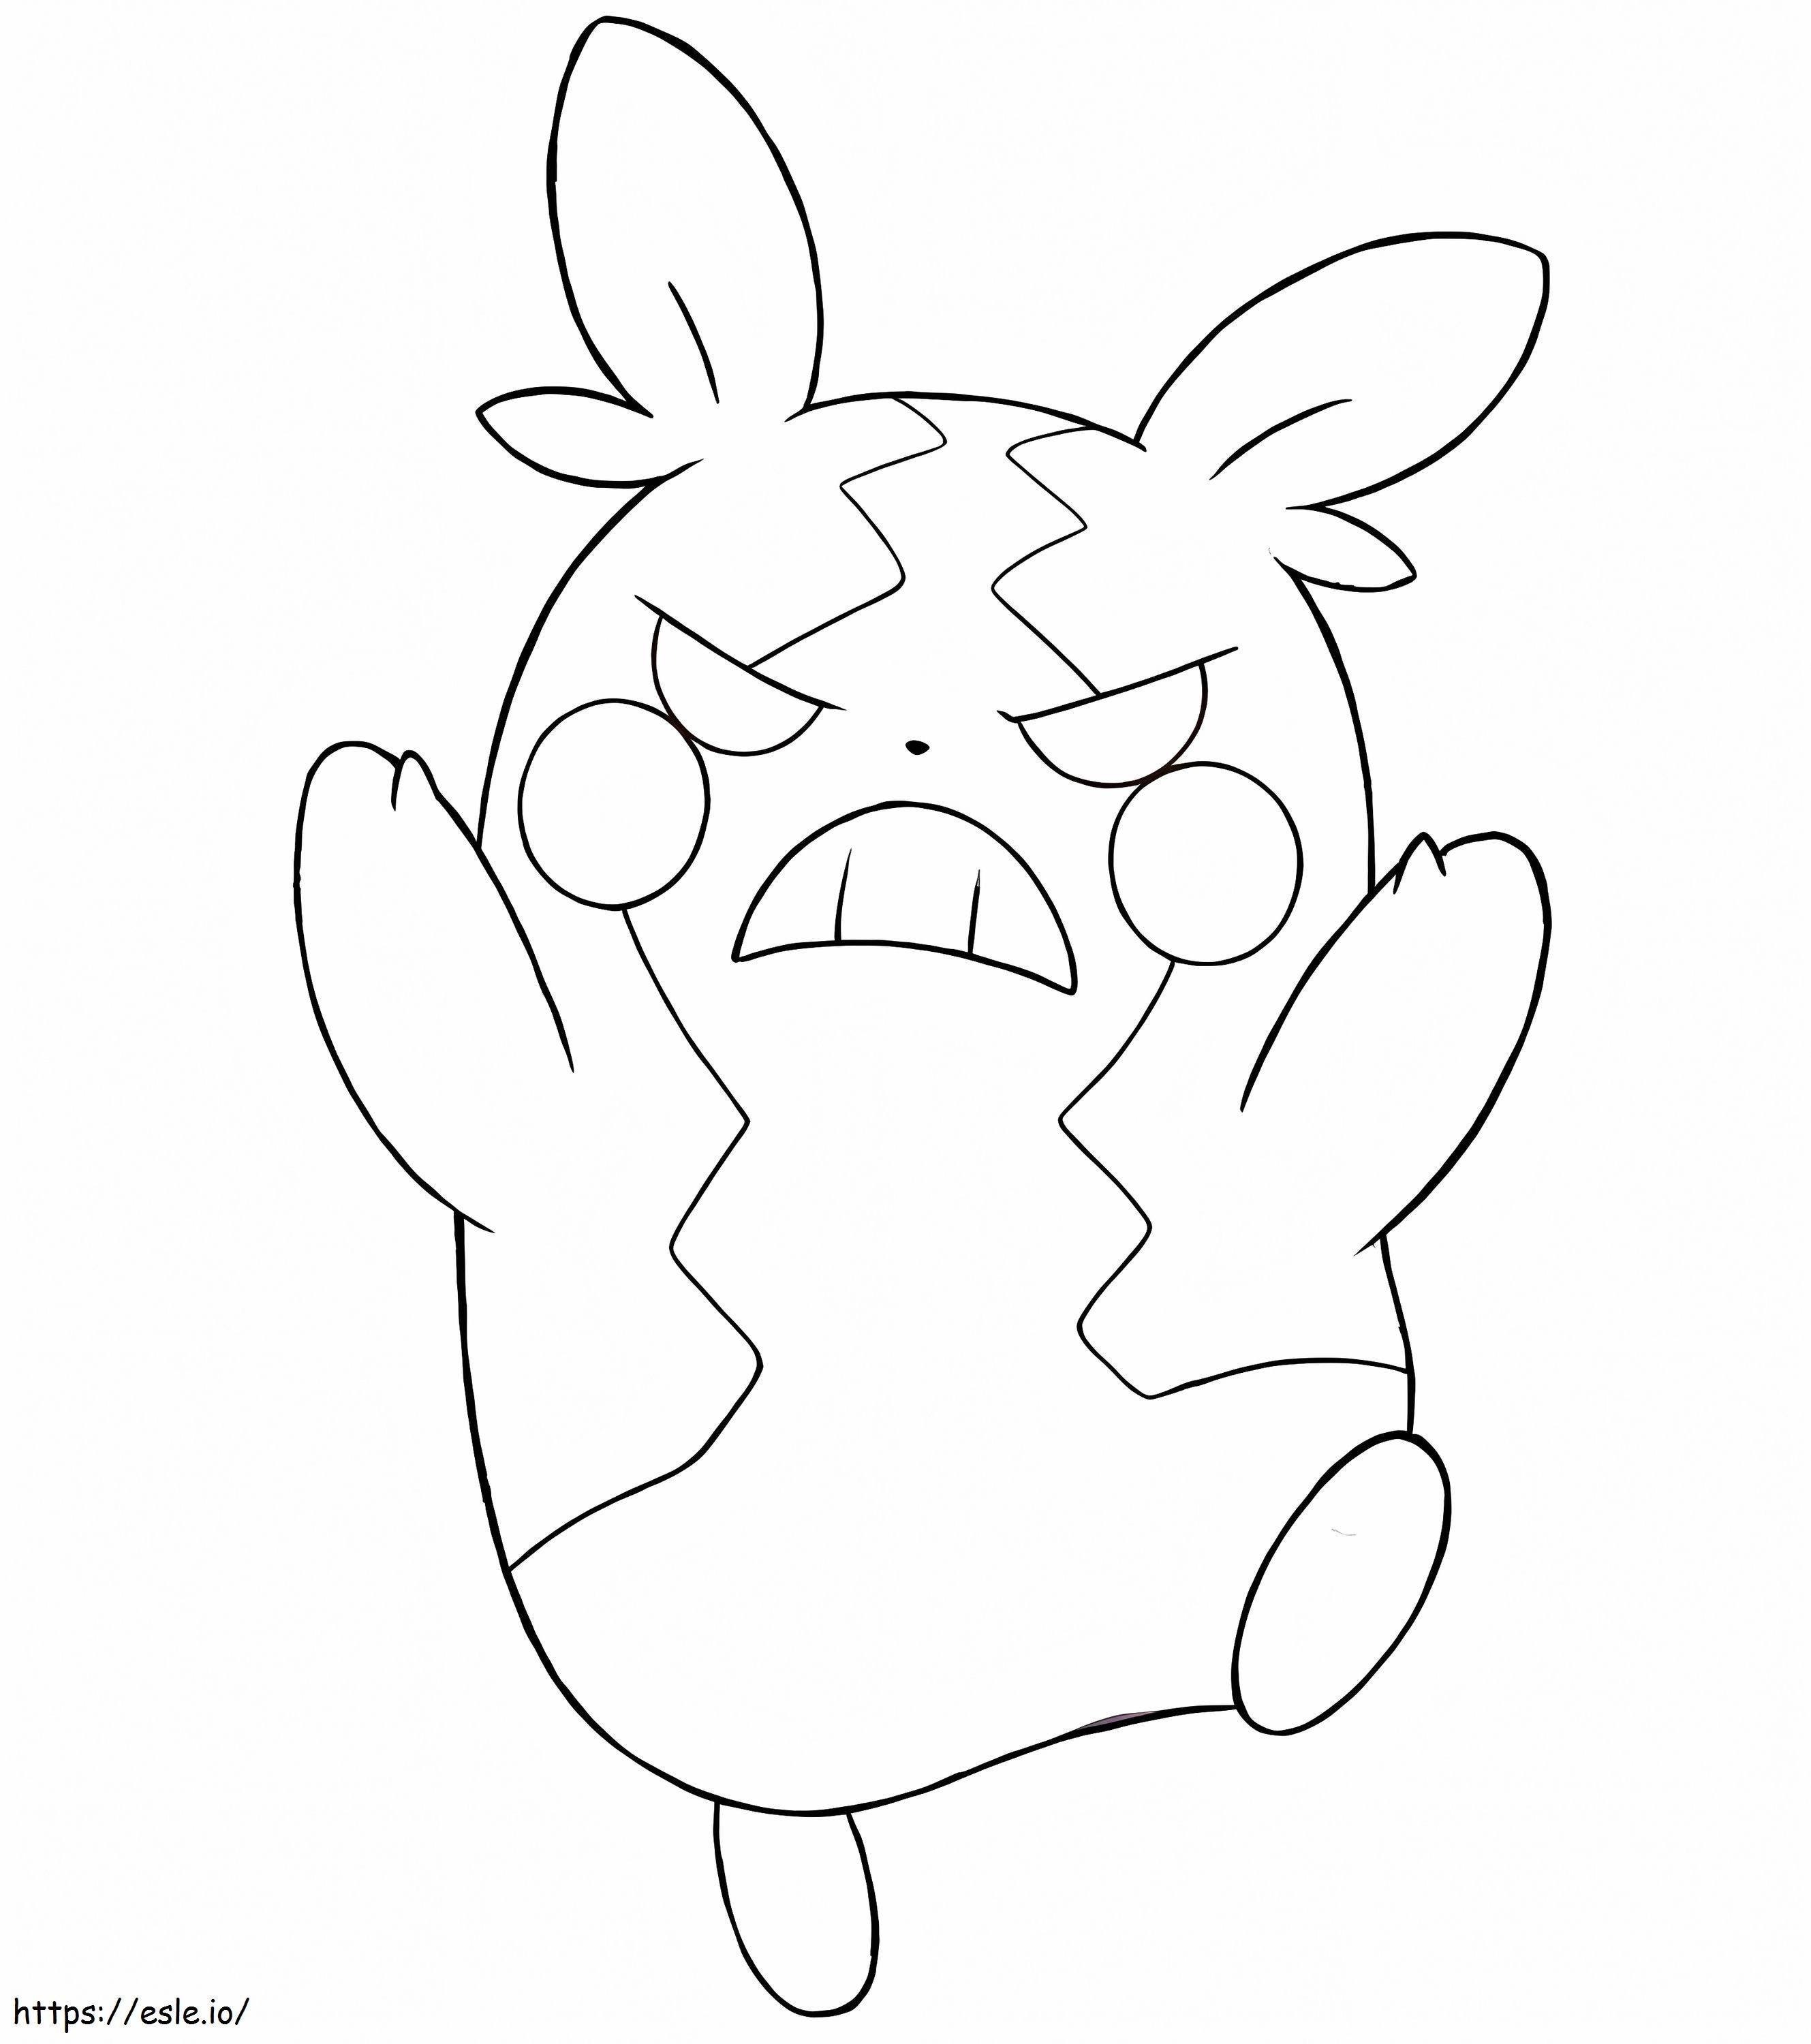 Coloriage Morpeko Pokémon 2 à imprimer dessin